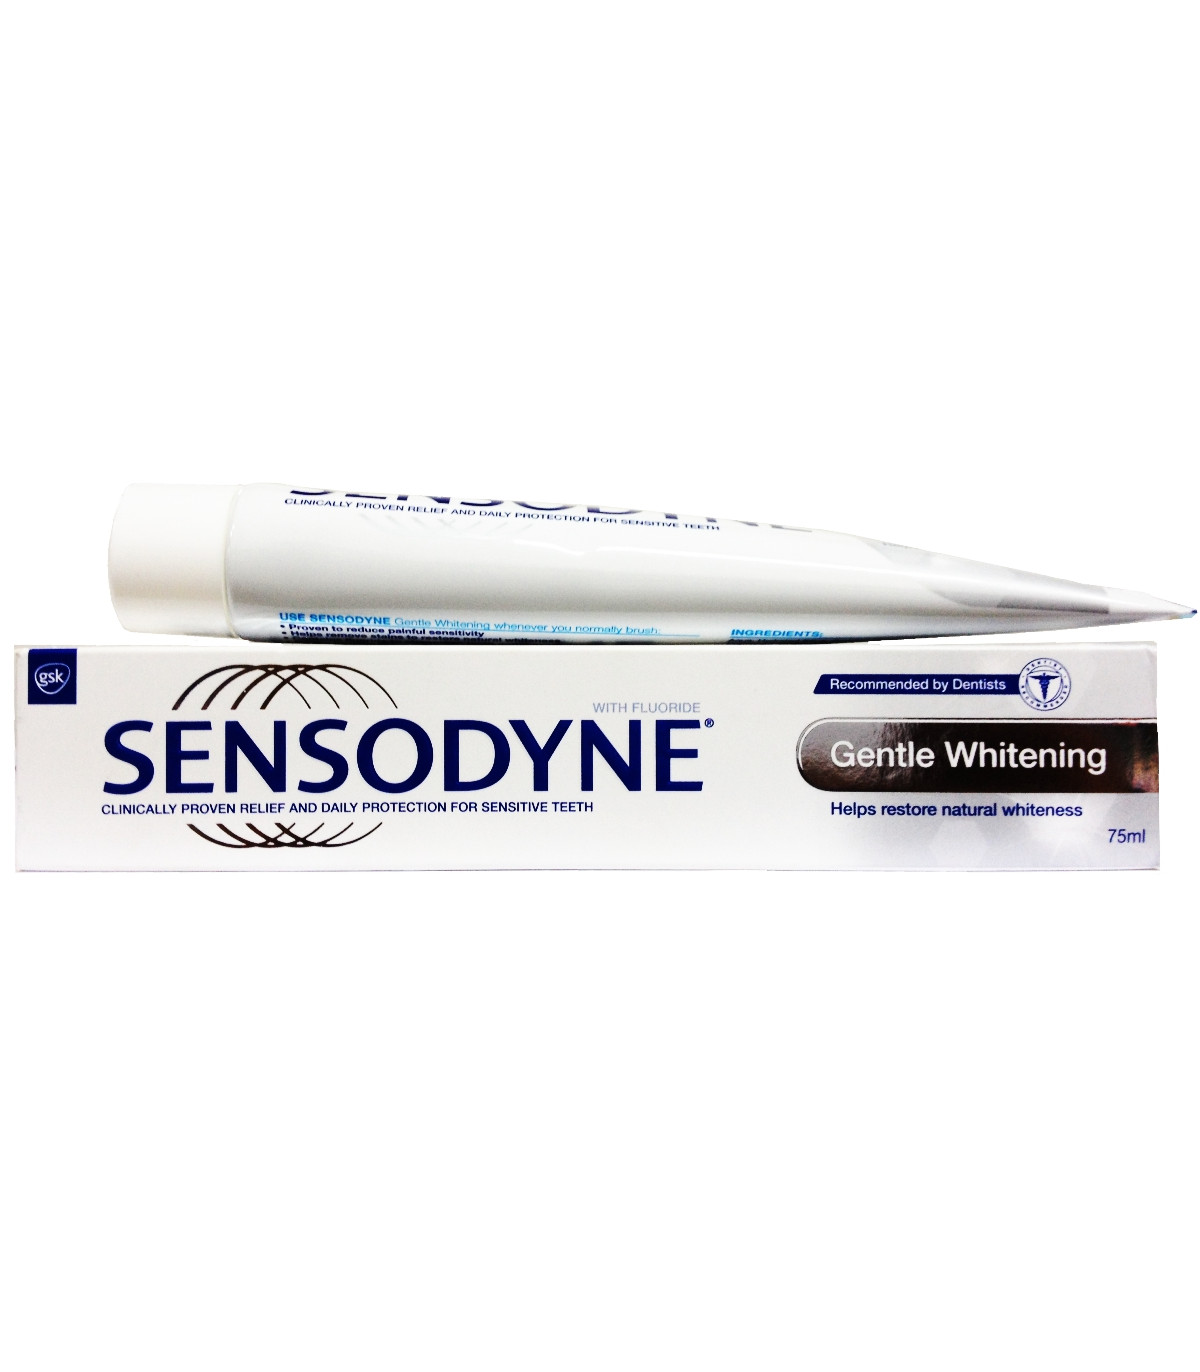 Sensodyne Gentle Whitening Toothpaste - 75ml